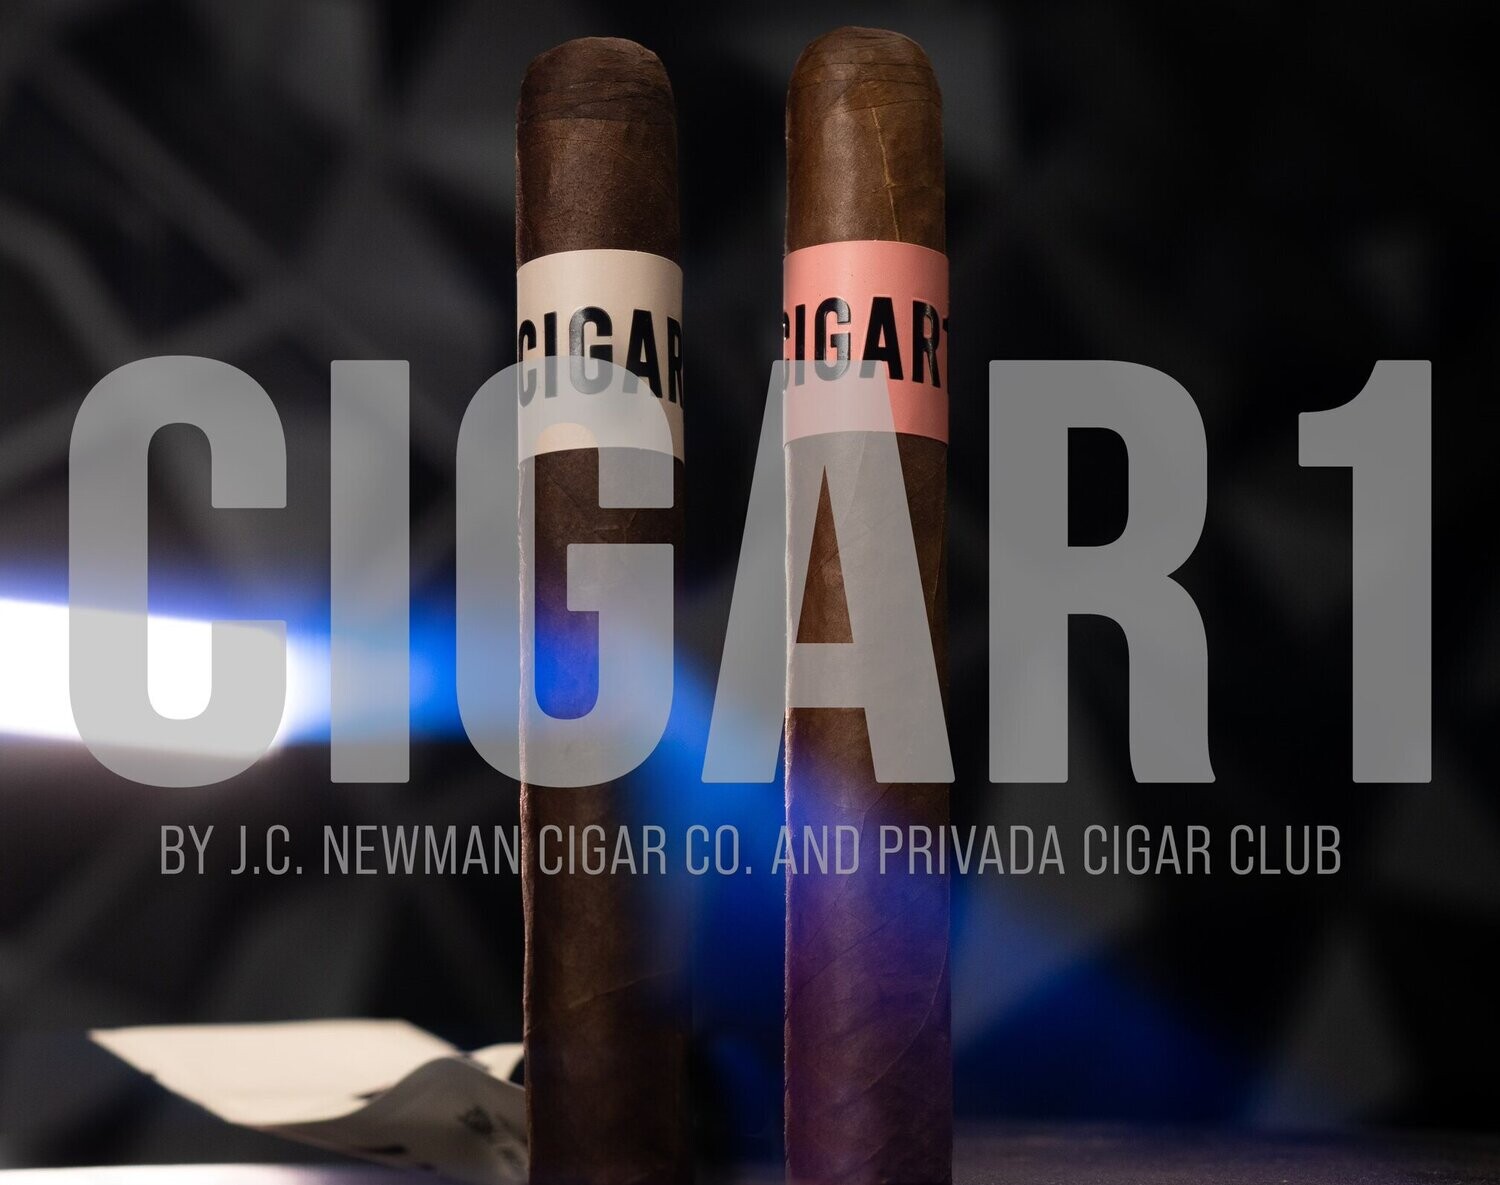 JC Newman Cigar1 Rose by Privada Cigar Club LCA 6 X 54 Toro Single Cigar